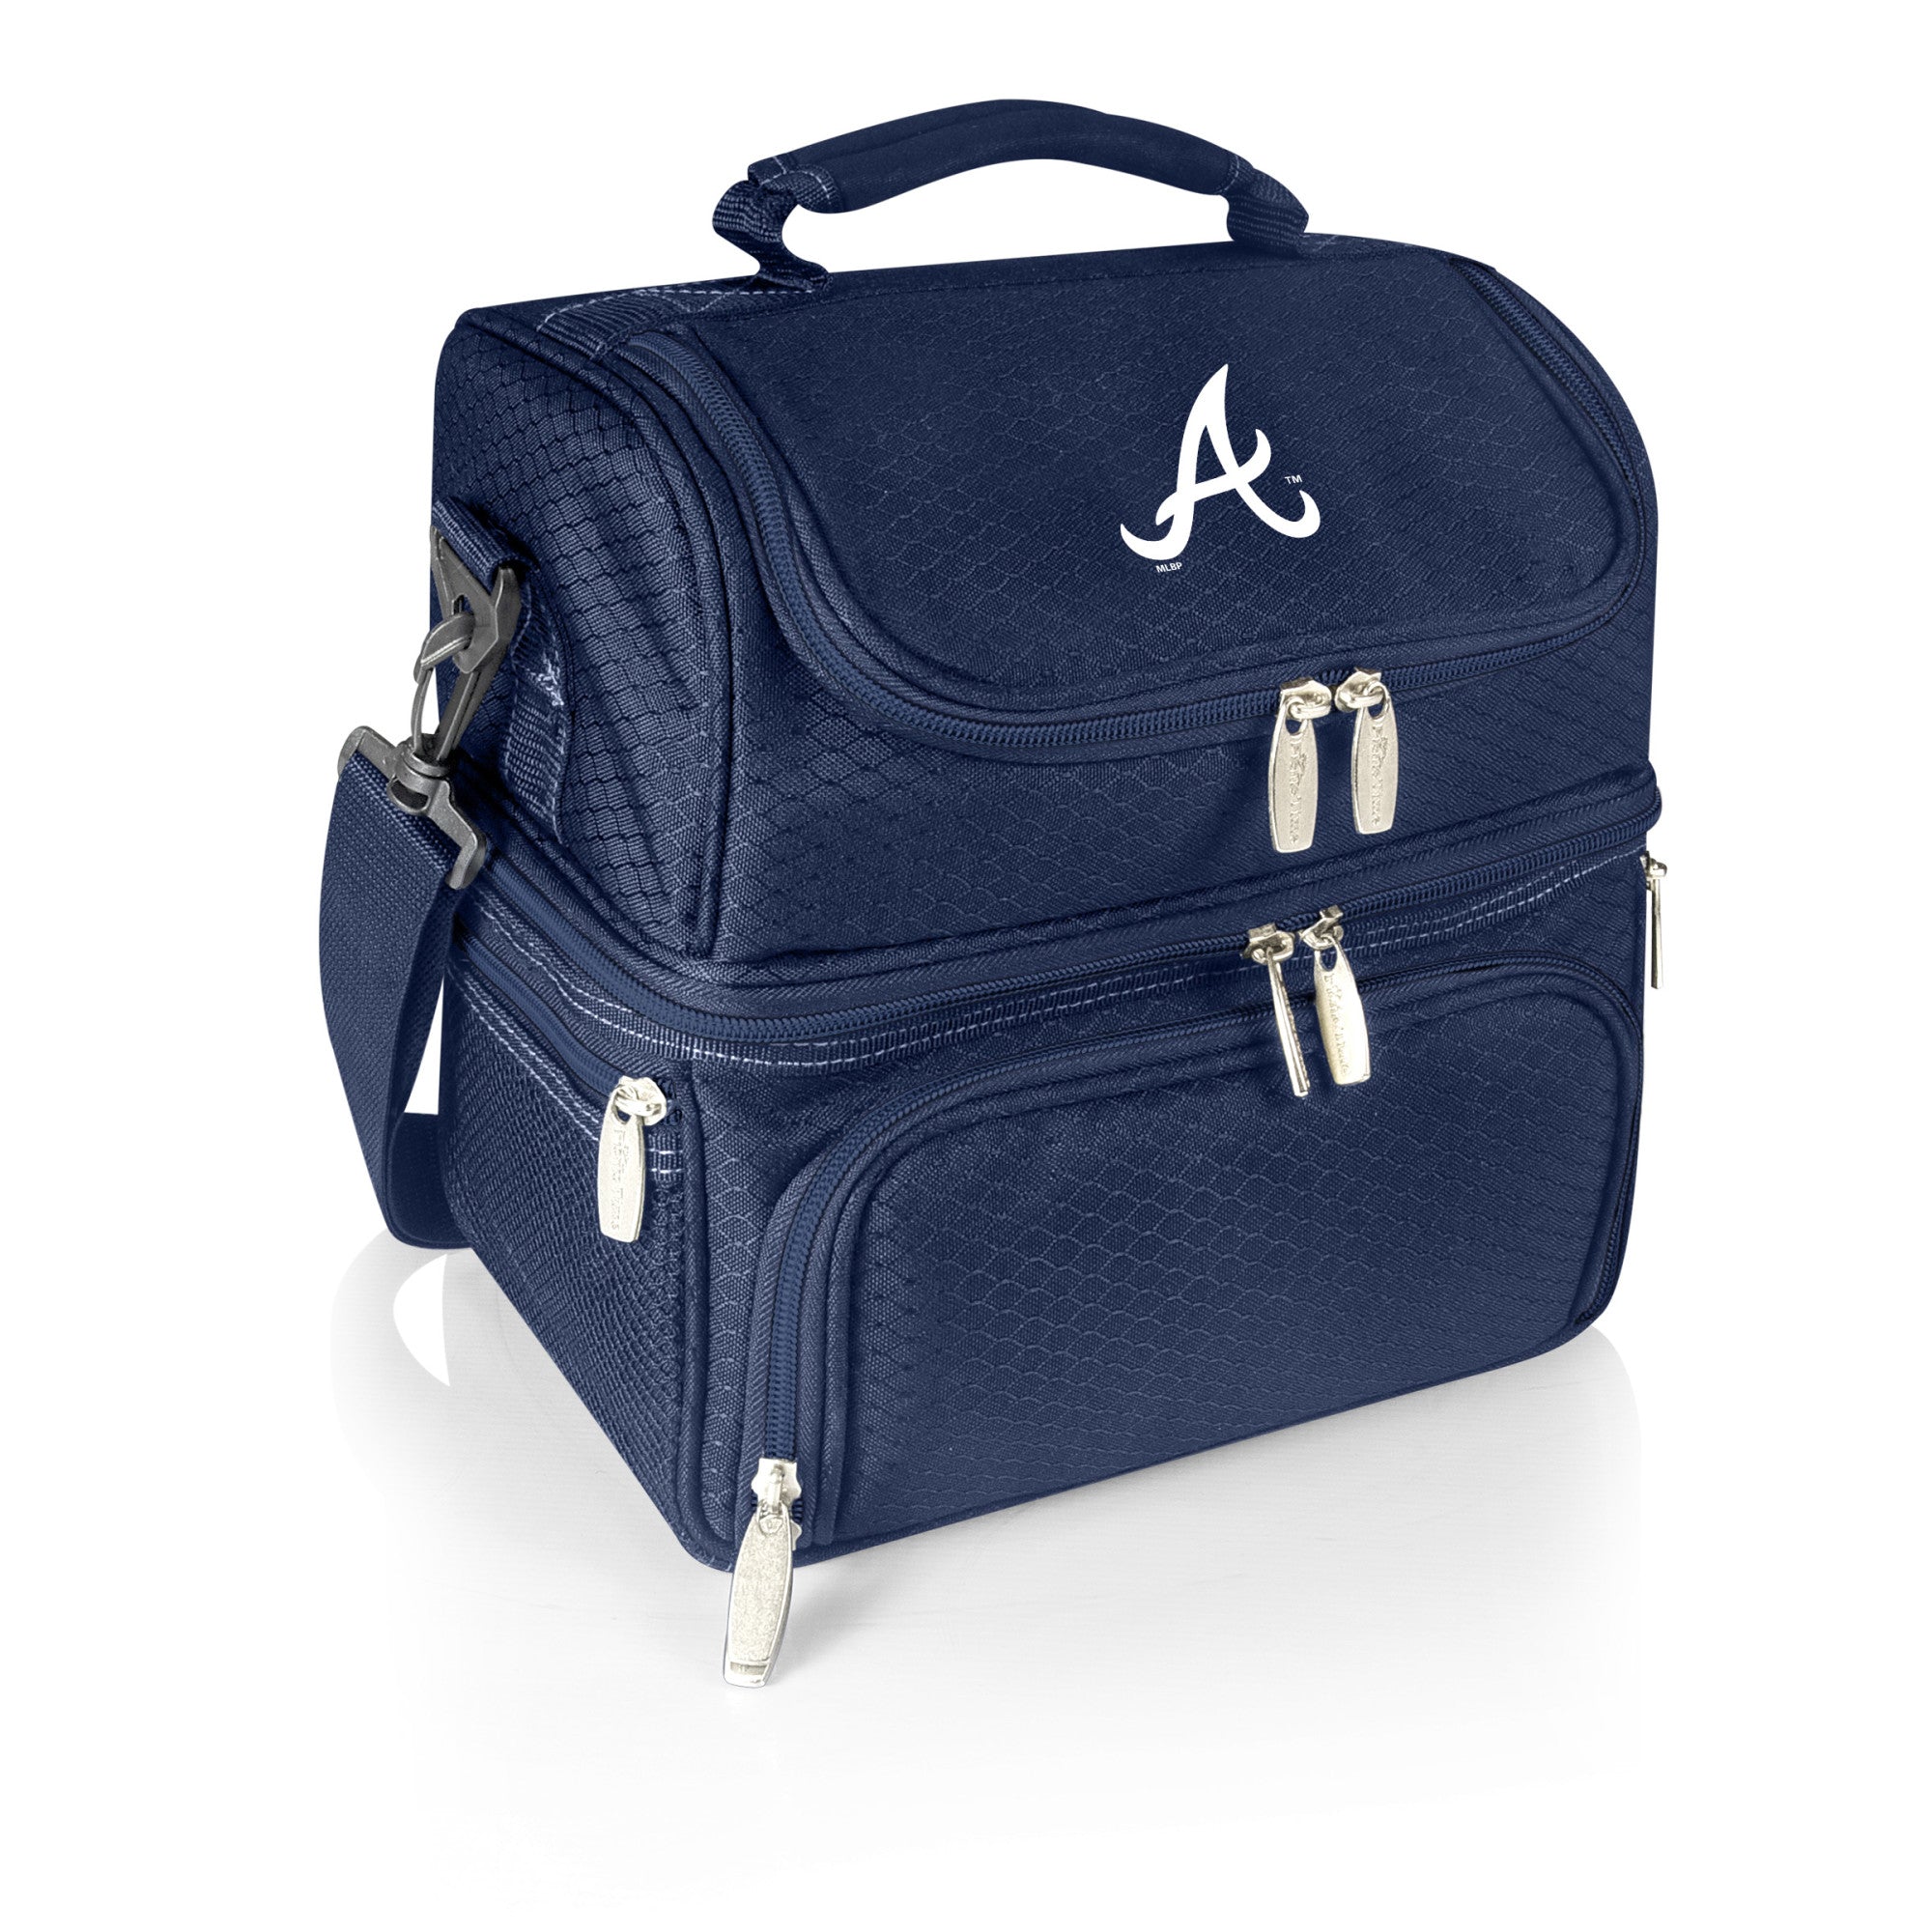 Atlanta Braves - Pranzo Lunch Bag Cooler with Utensils